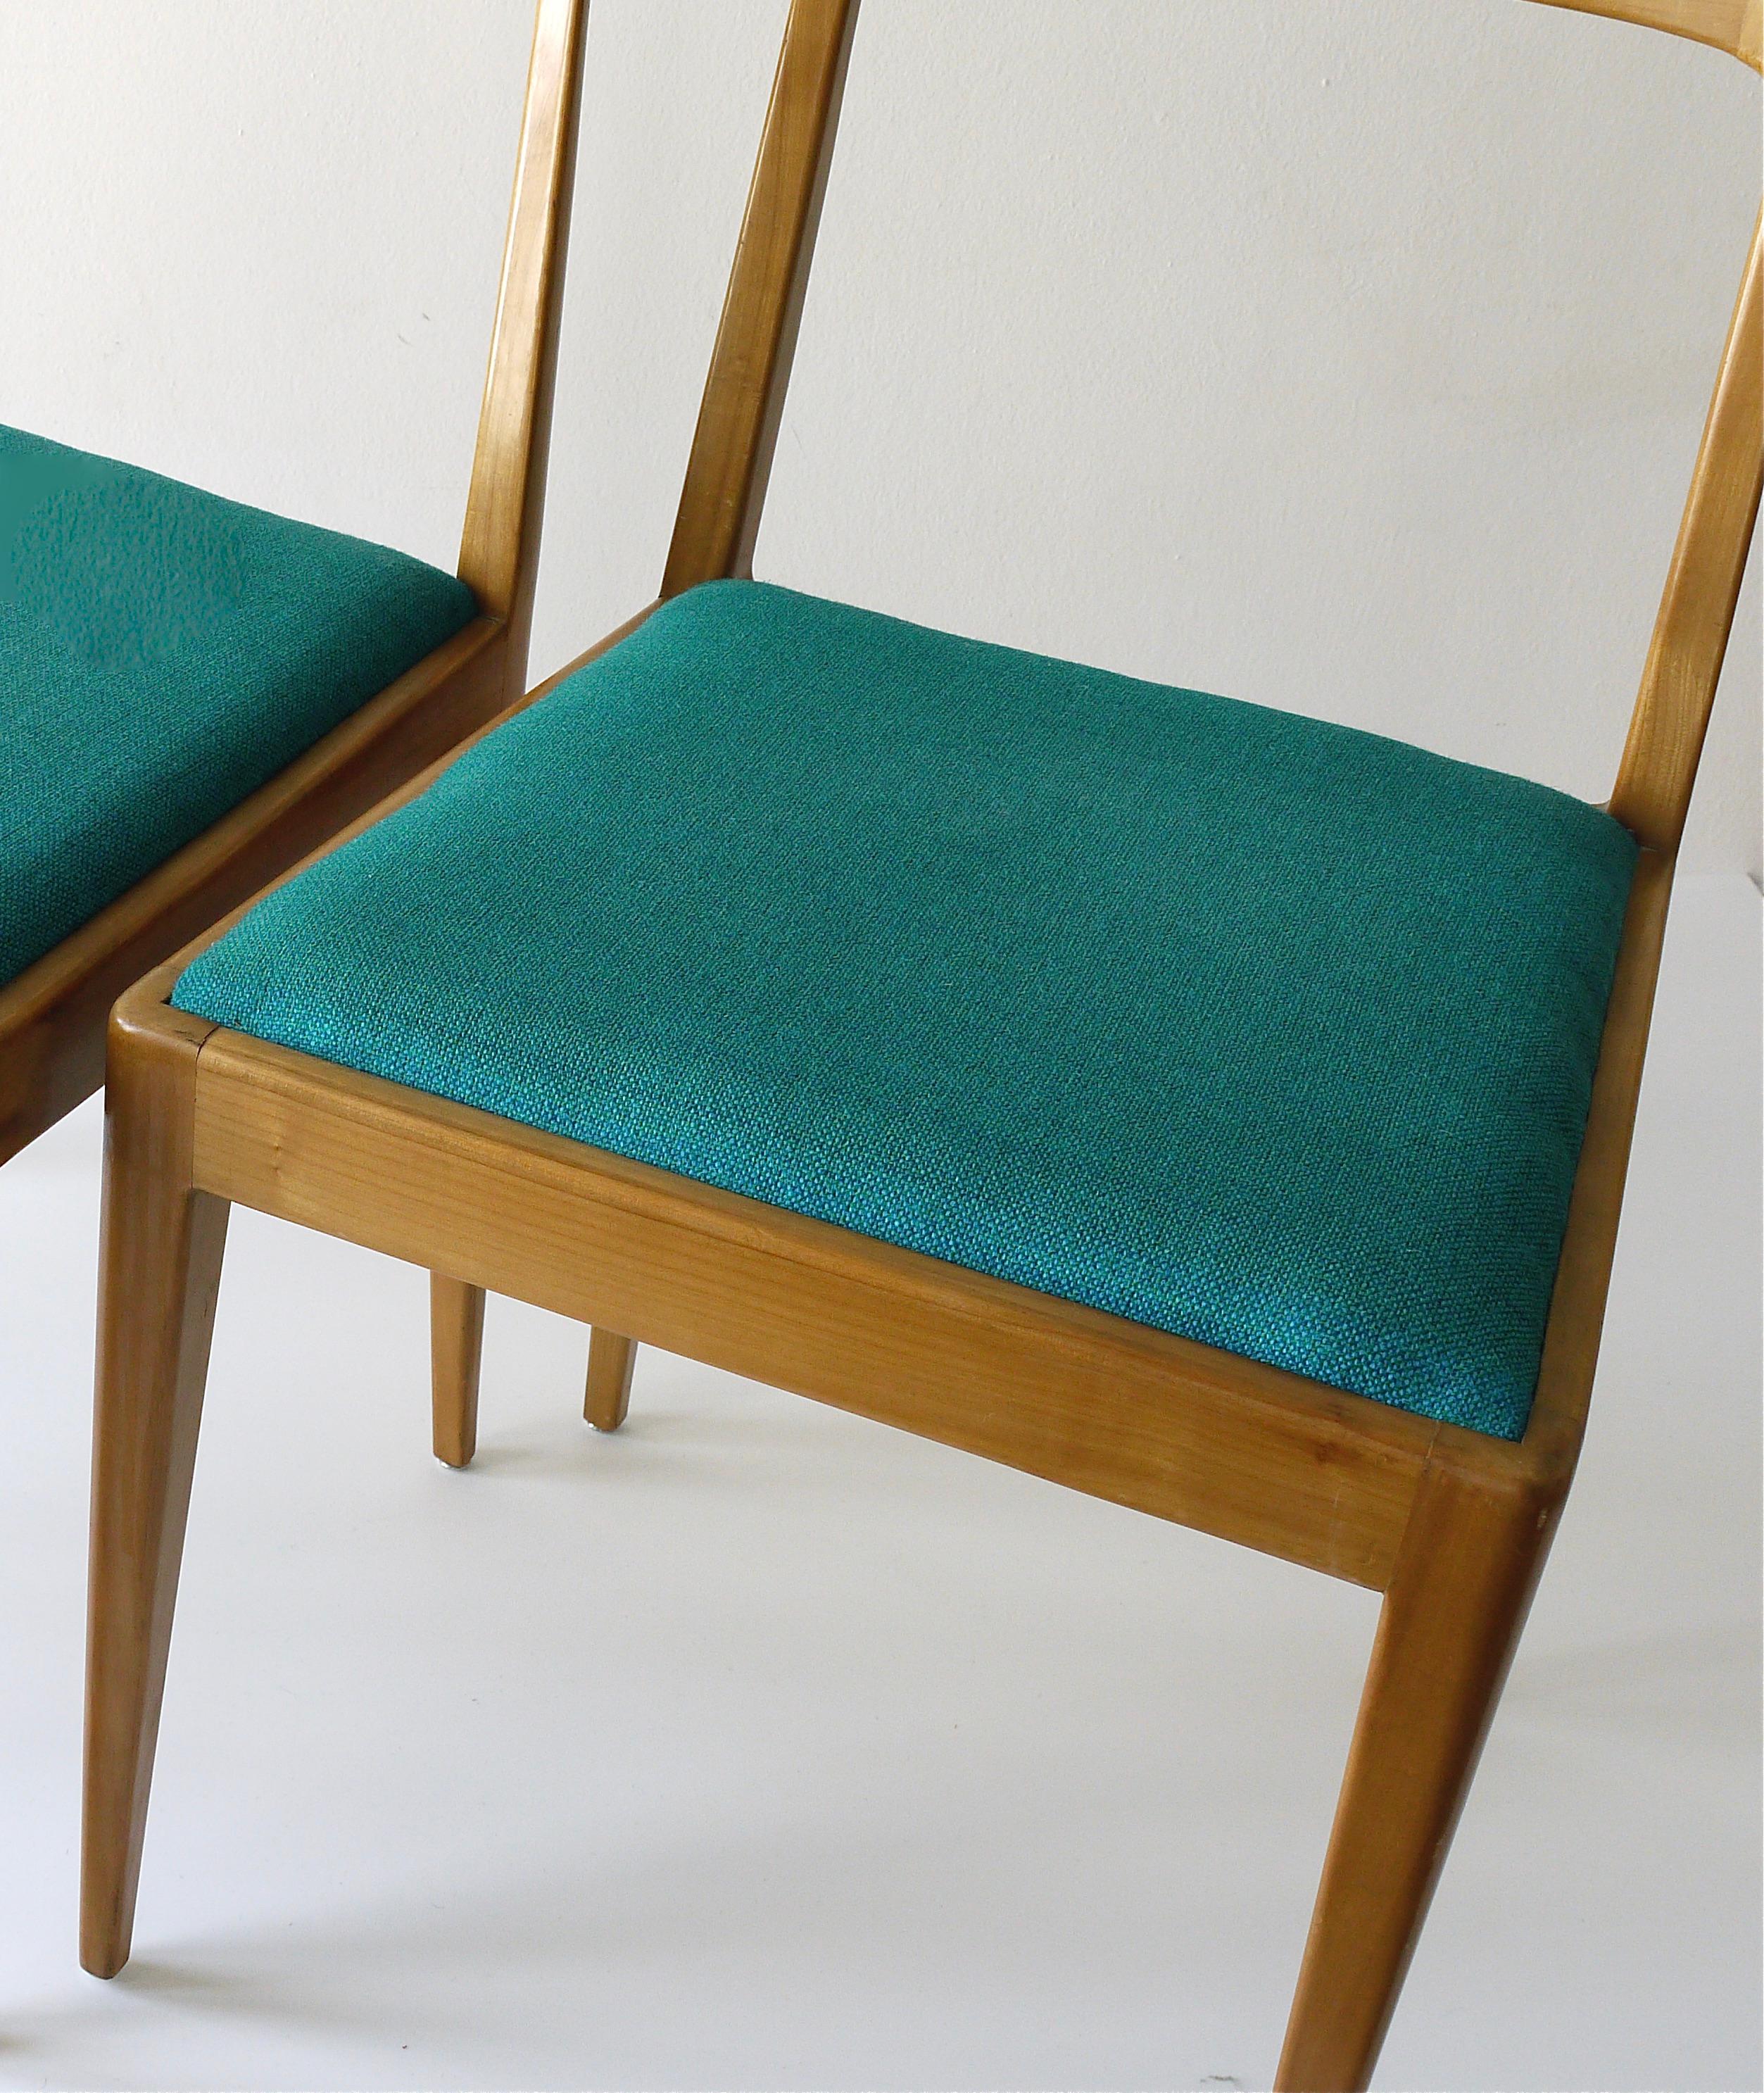 Four Carl Aubock Midcentury Walnut Chairs A7, Vienna, Austria, 1950s For Sale 6